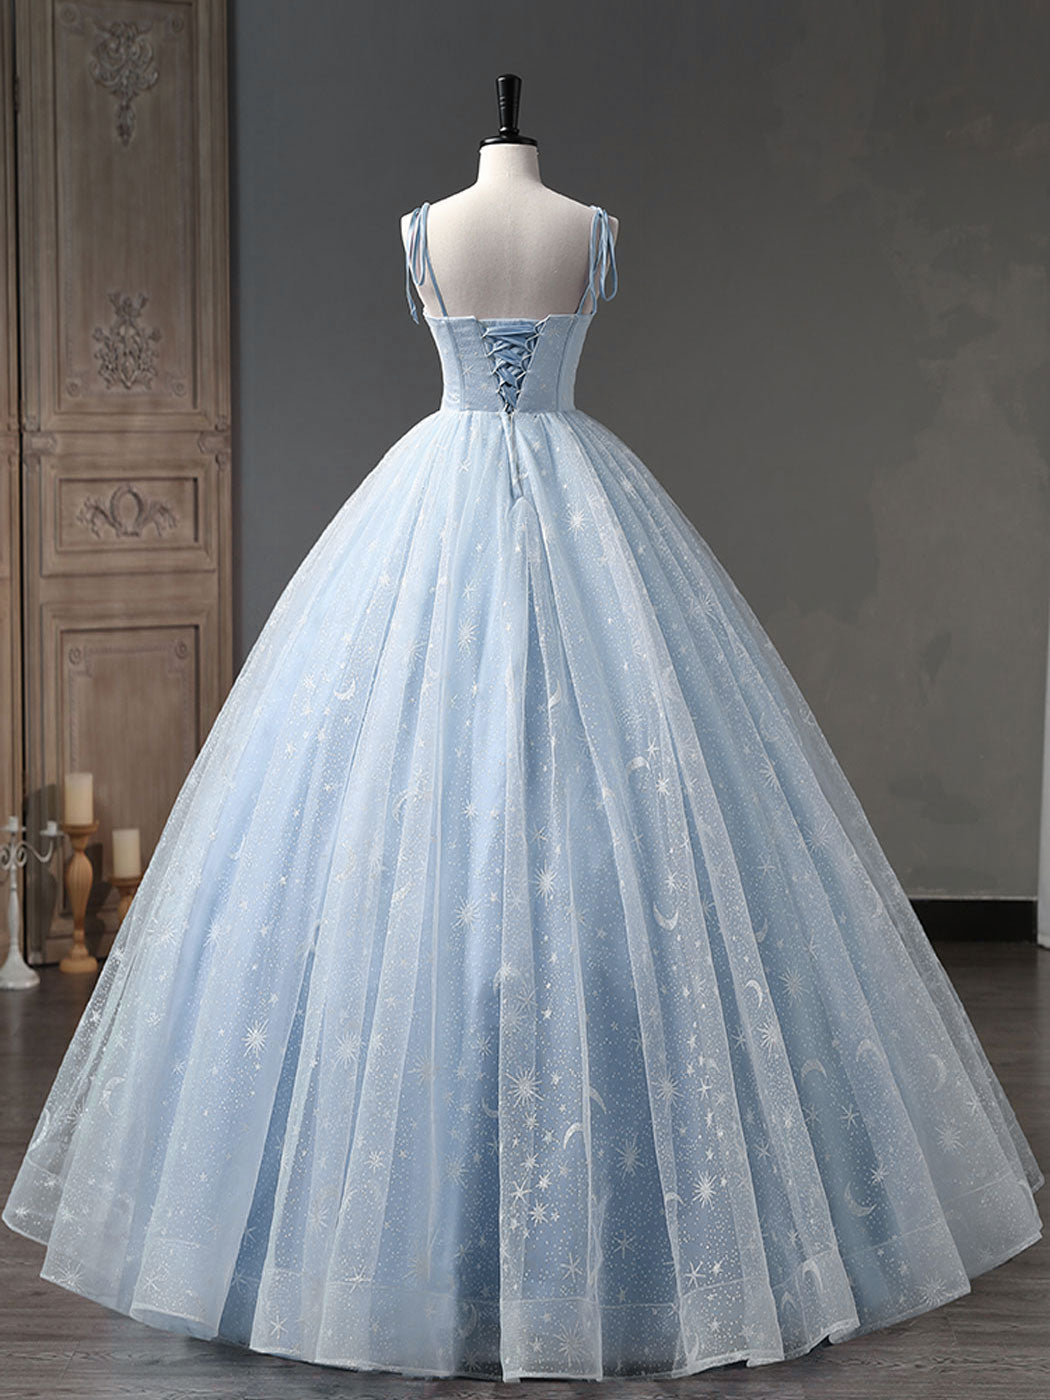 Light Blue Ball Gown Corset Prom Dress Quinceanera Dress - DollyGown